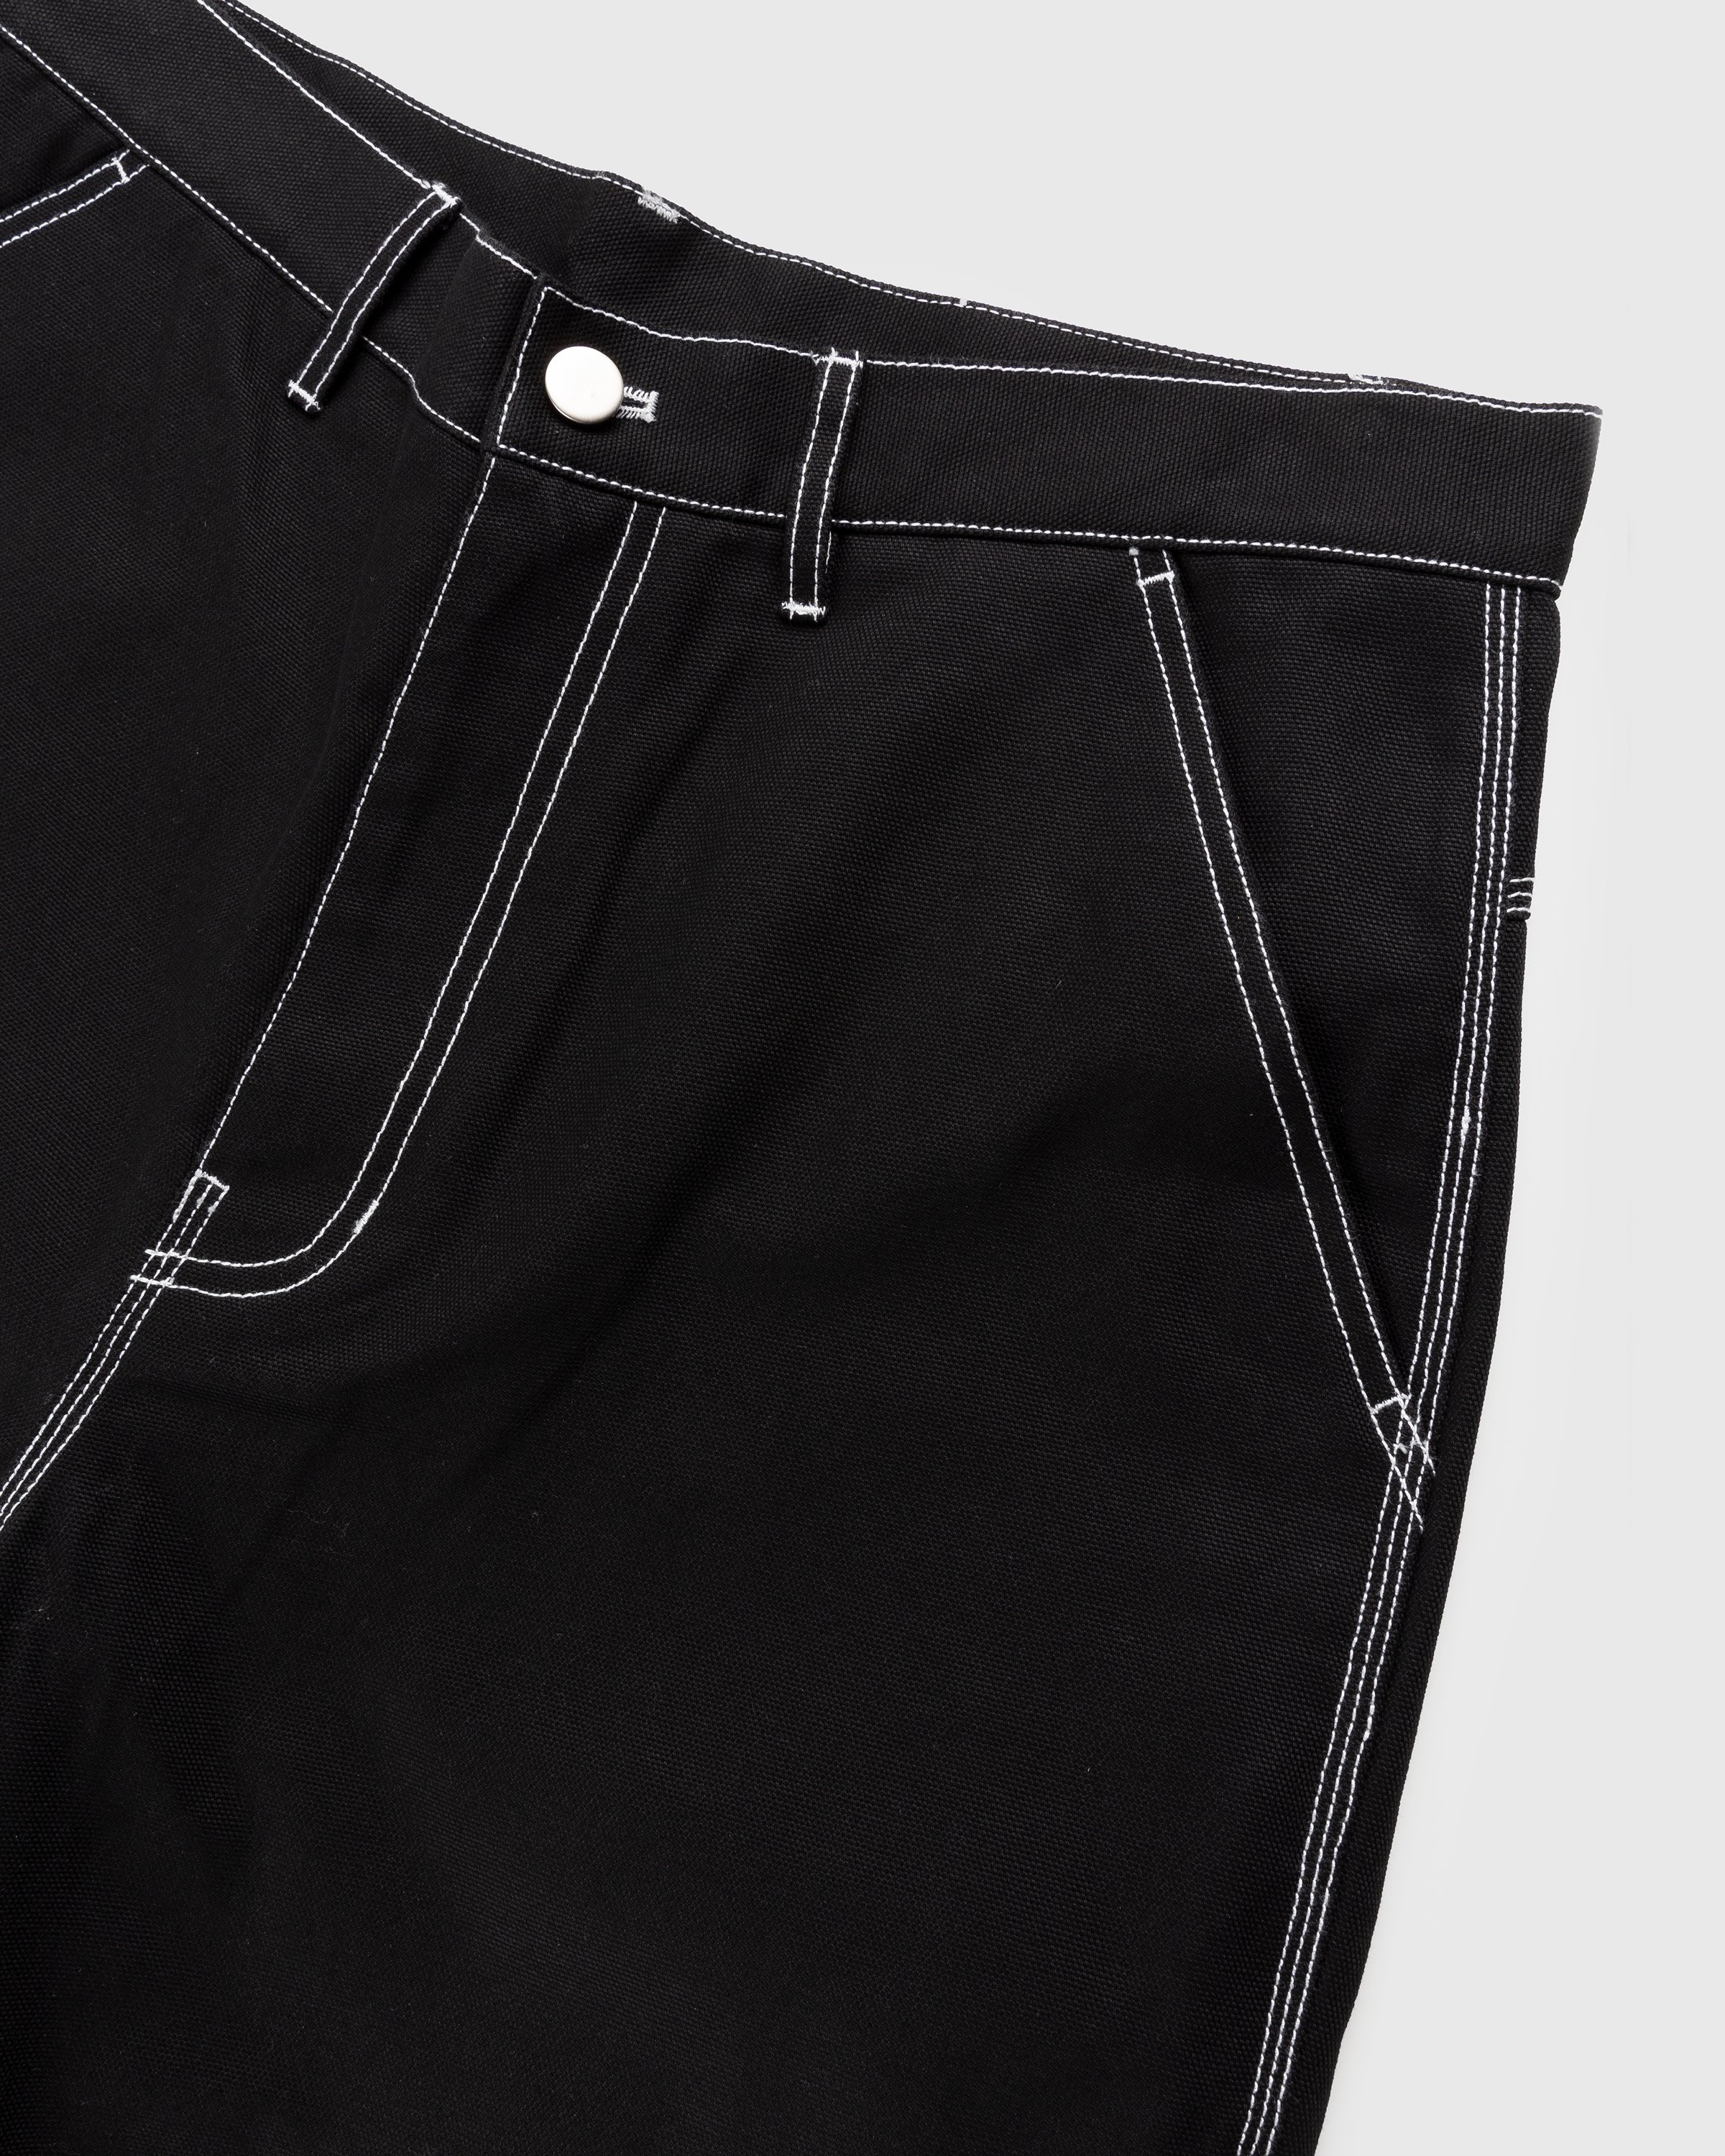 RUF x Highsnobiety – Cotton Work Pants Black - Work Pants - Black - Image 3